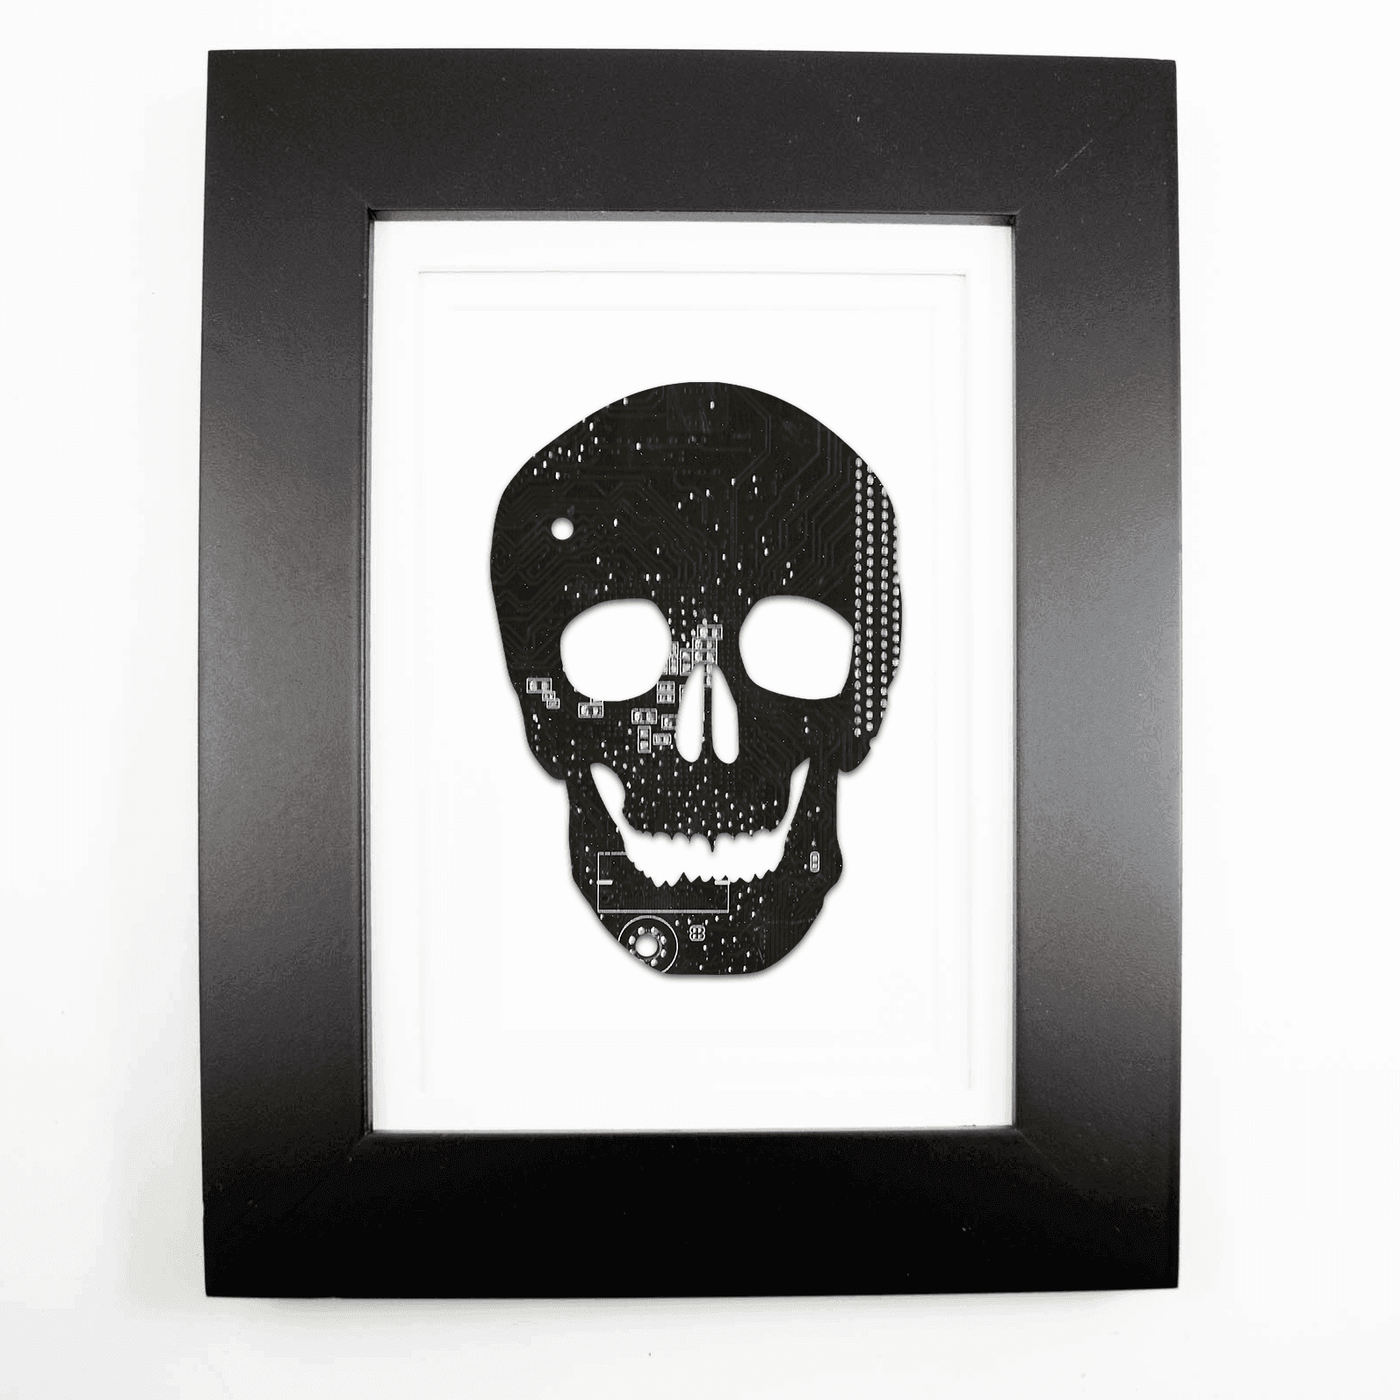 Human Skull Circuit Board Art - 5x7